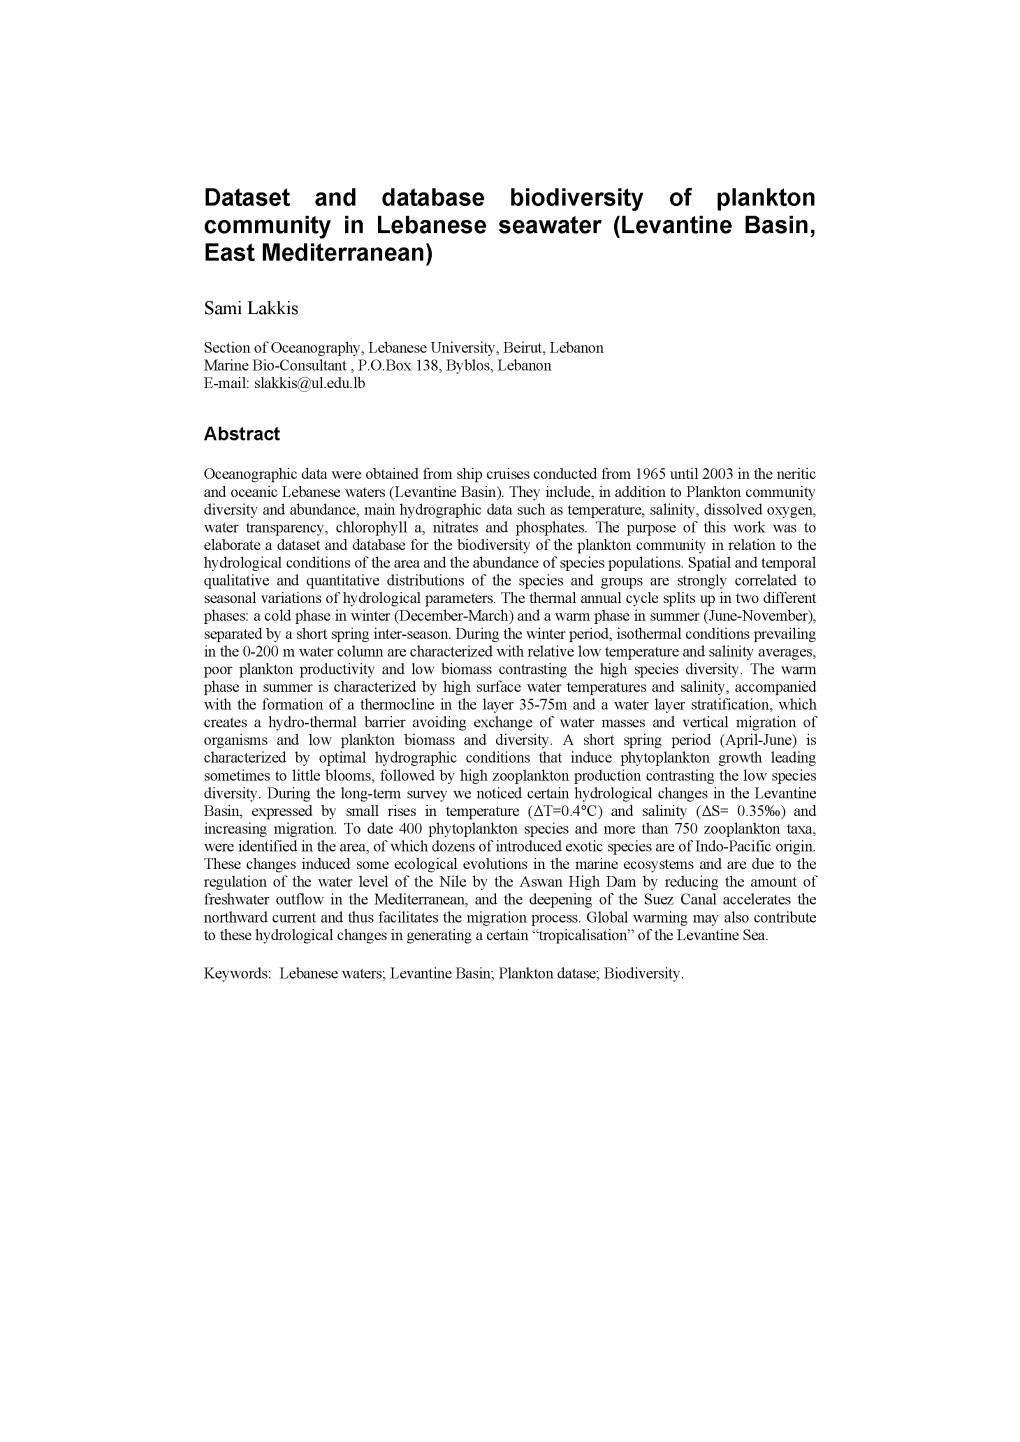 Dataset and Database Biodiversity of Plankton Community in Lebanese Seawater (Levantine Basin, East Mediterranean)